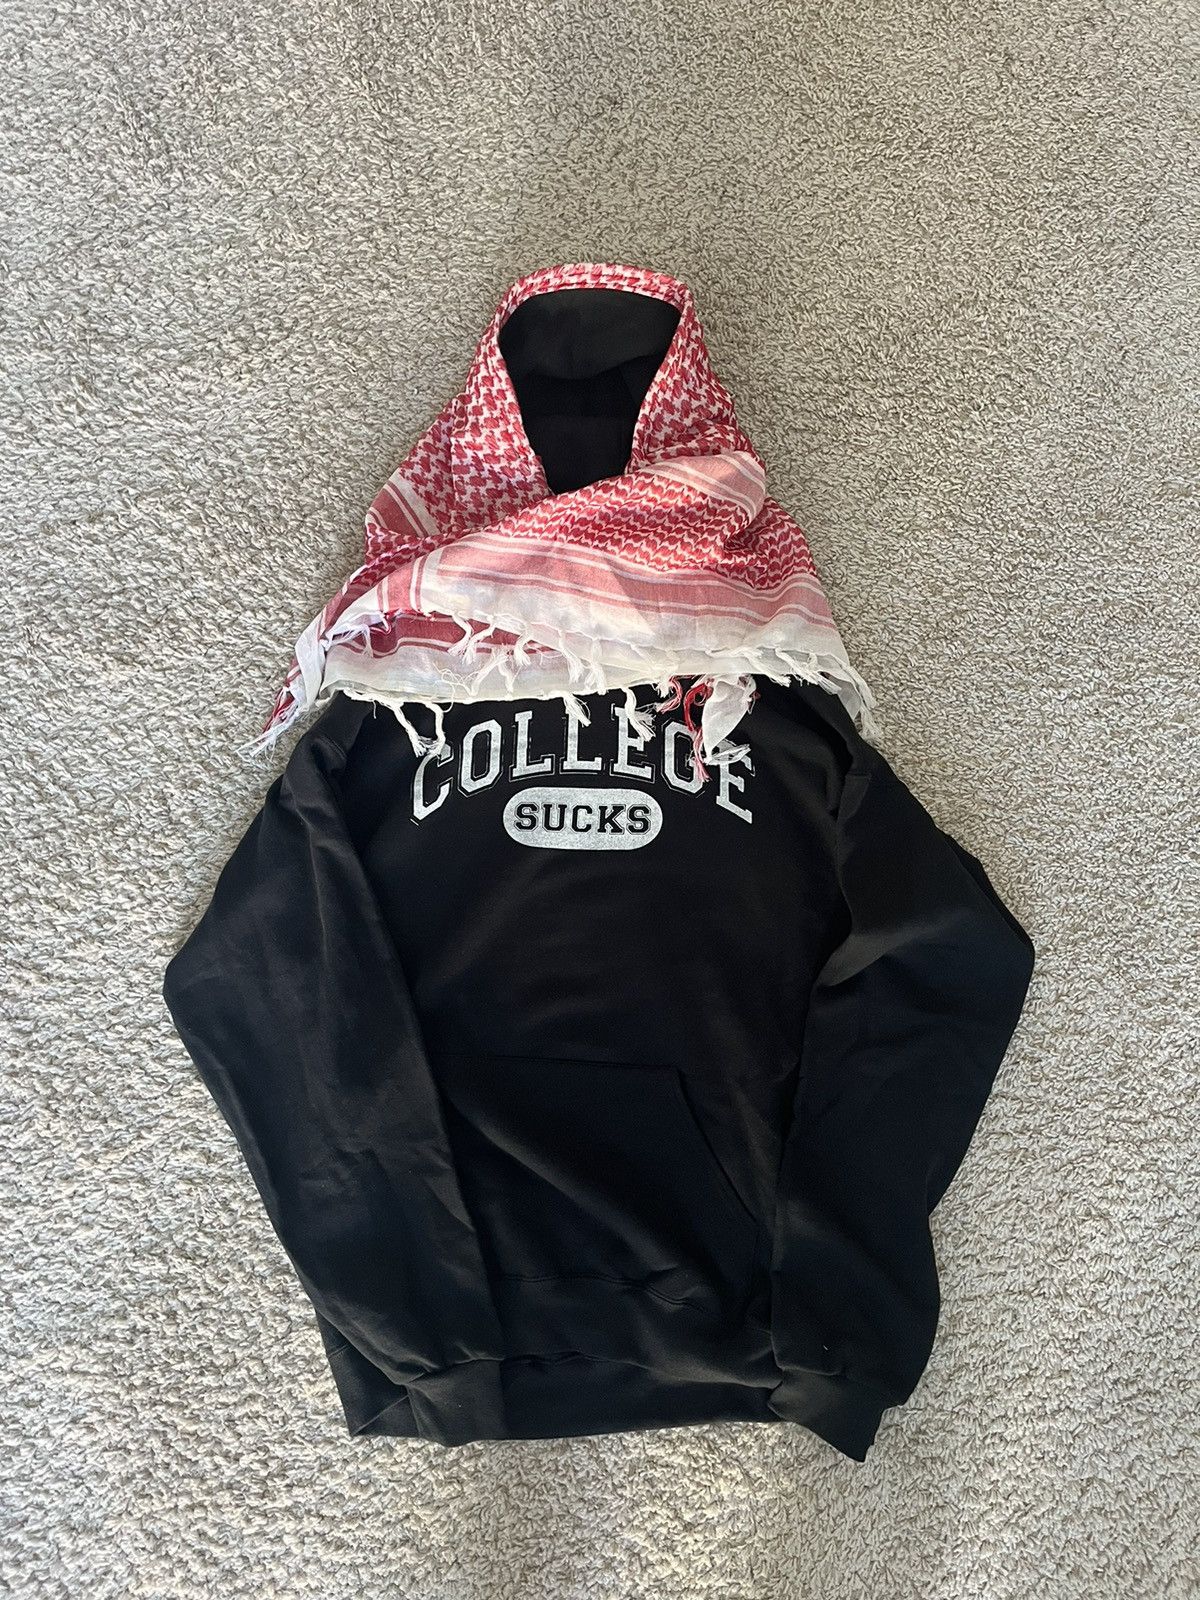 Custom Grimykids turban hoodie College sucks | Grailed